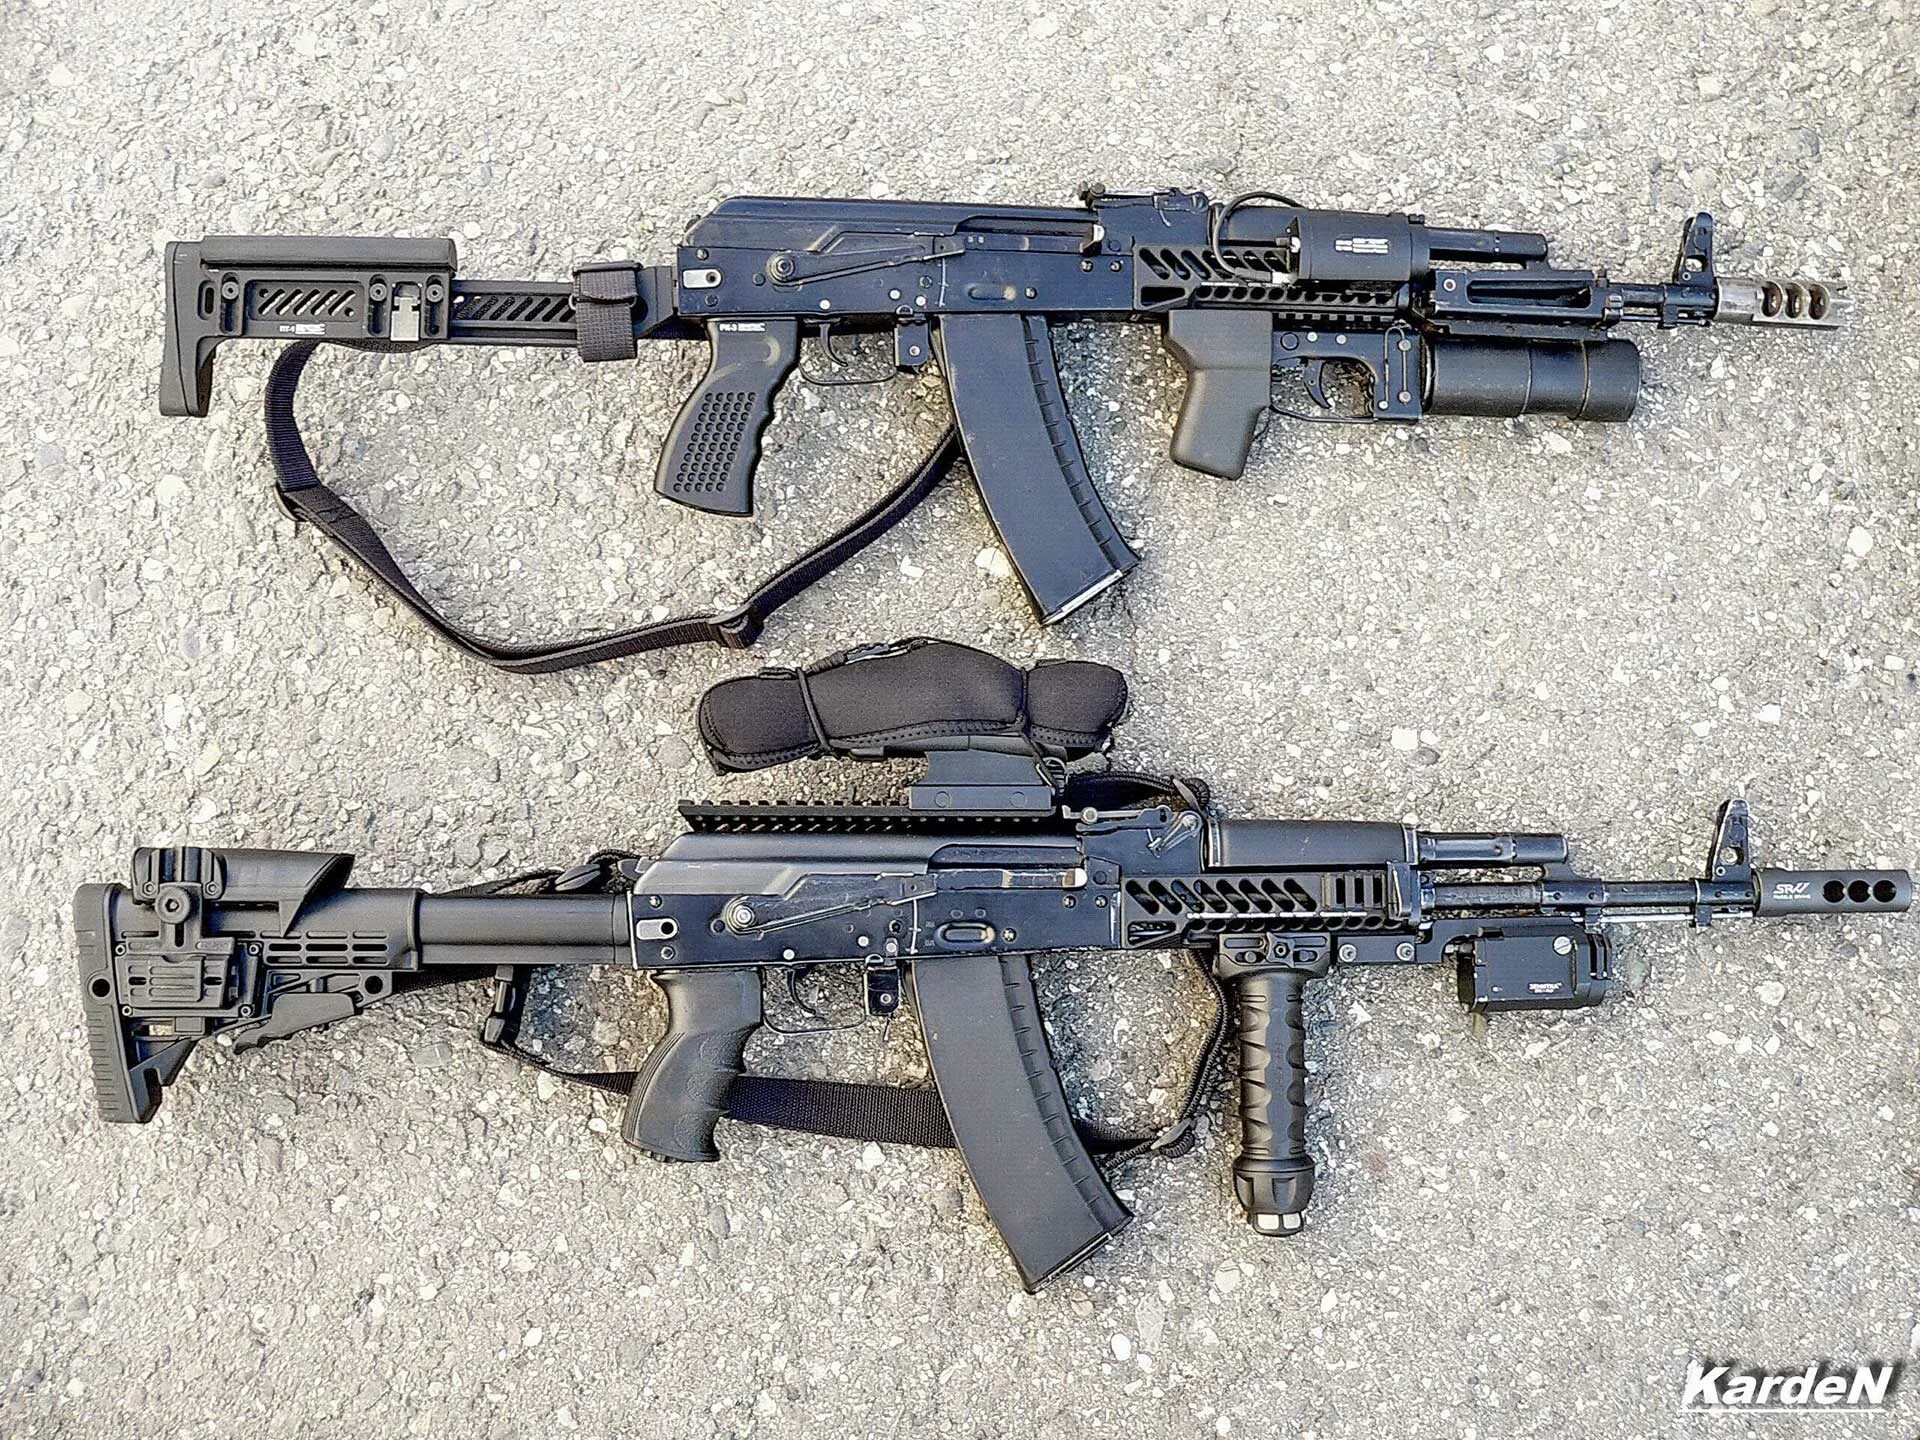 Мм ак 74. Автомат АКМ 74. Автомат AK-74m. Автомат Калашникова 74м. Автомат Калашникова модернизированный АК-74м.